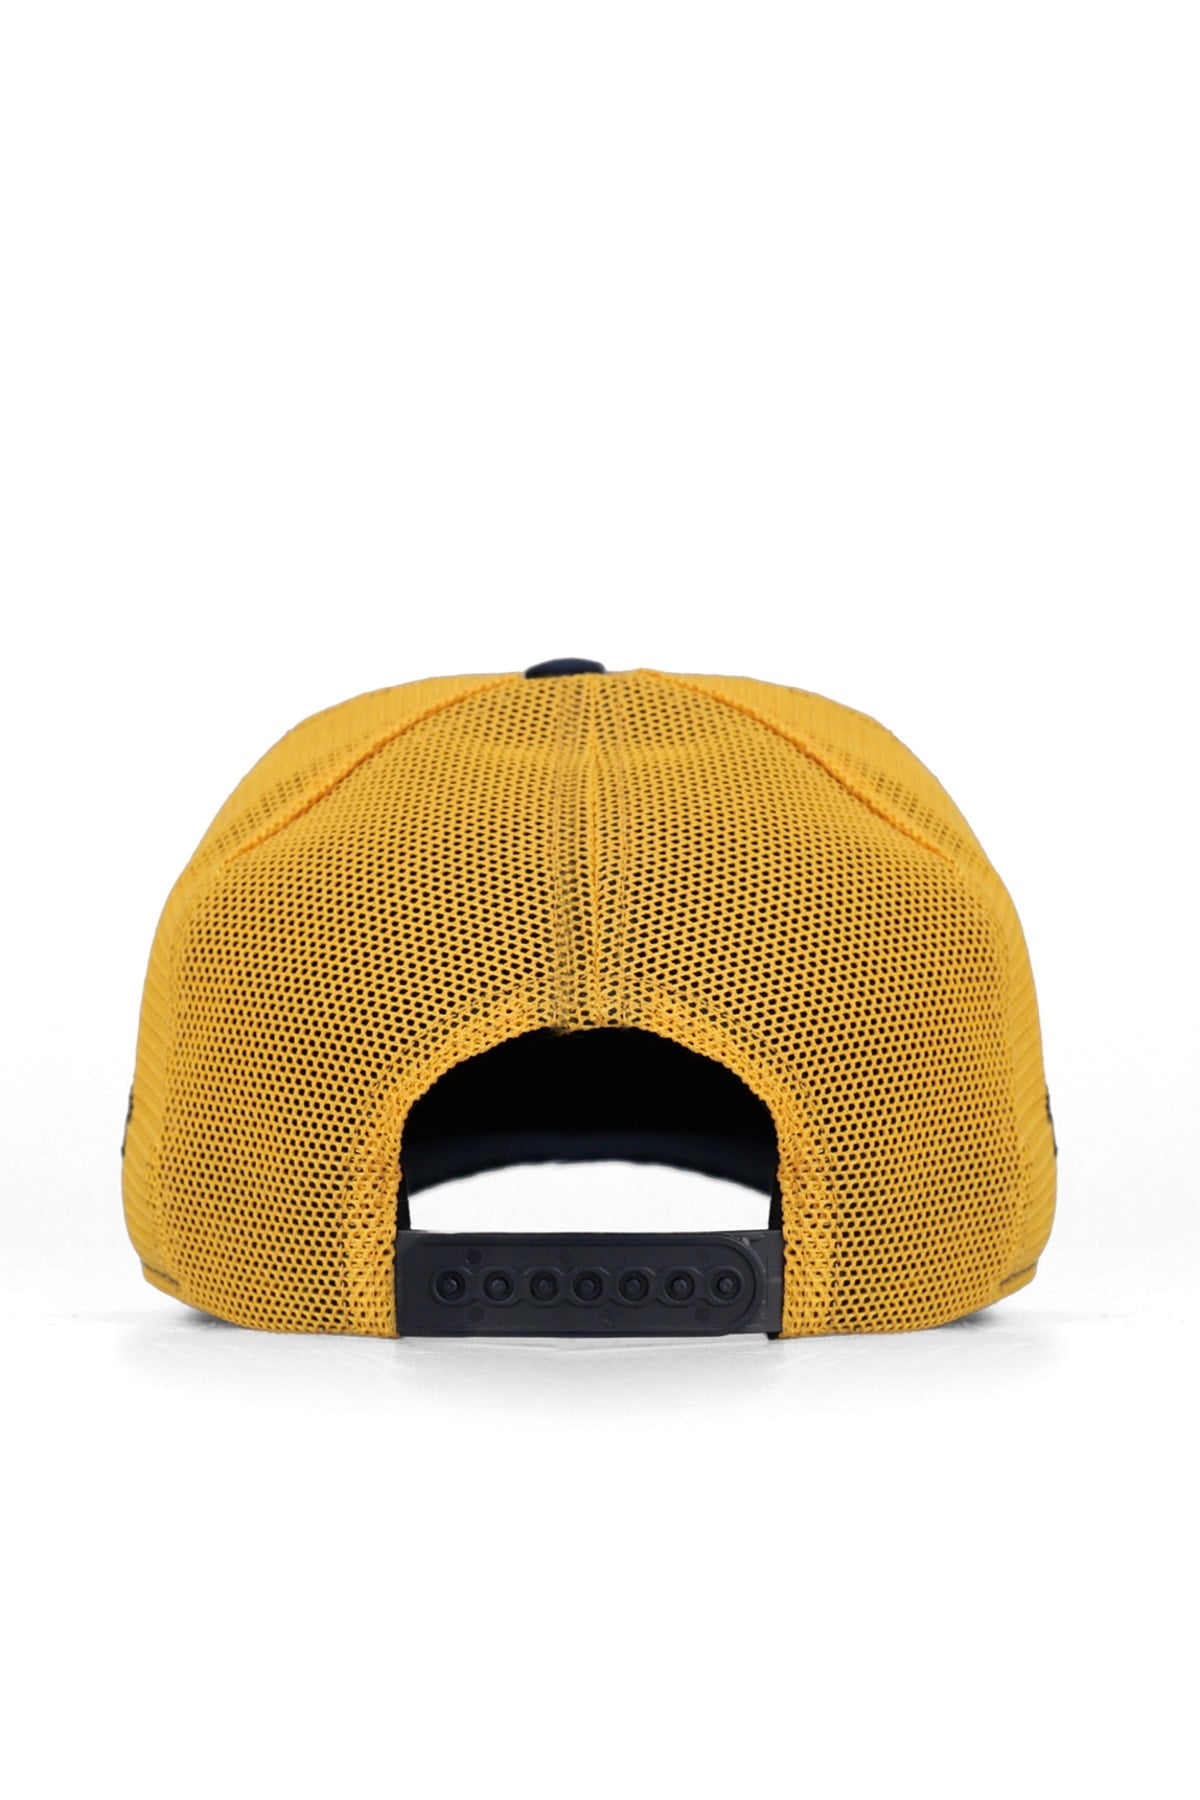 V1 Trucker Dance Bear - Unisex Navy Blue-Yellow Hat (Cap) with 5 Code Logo